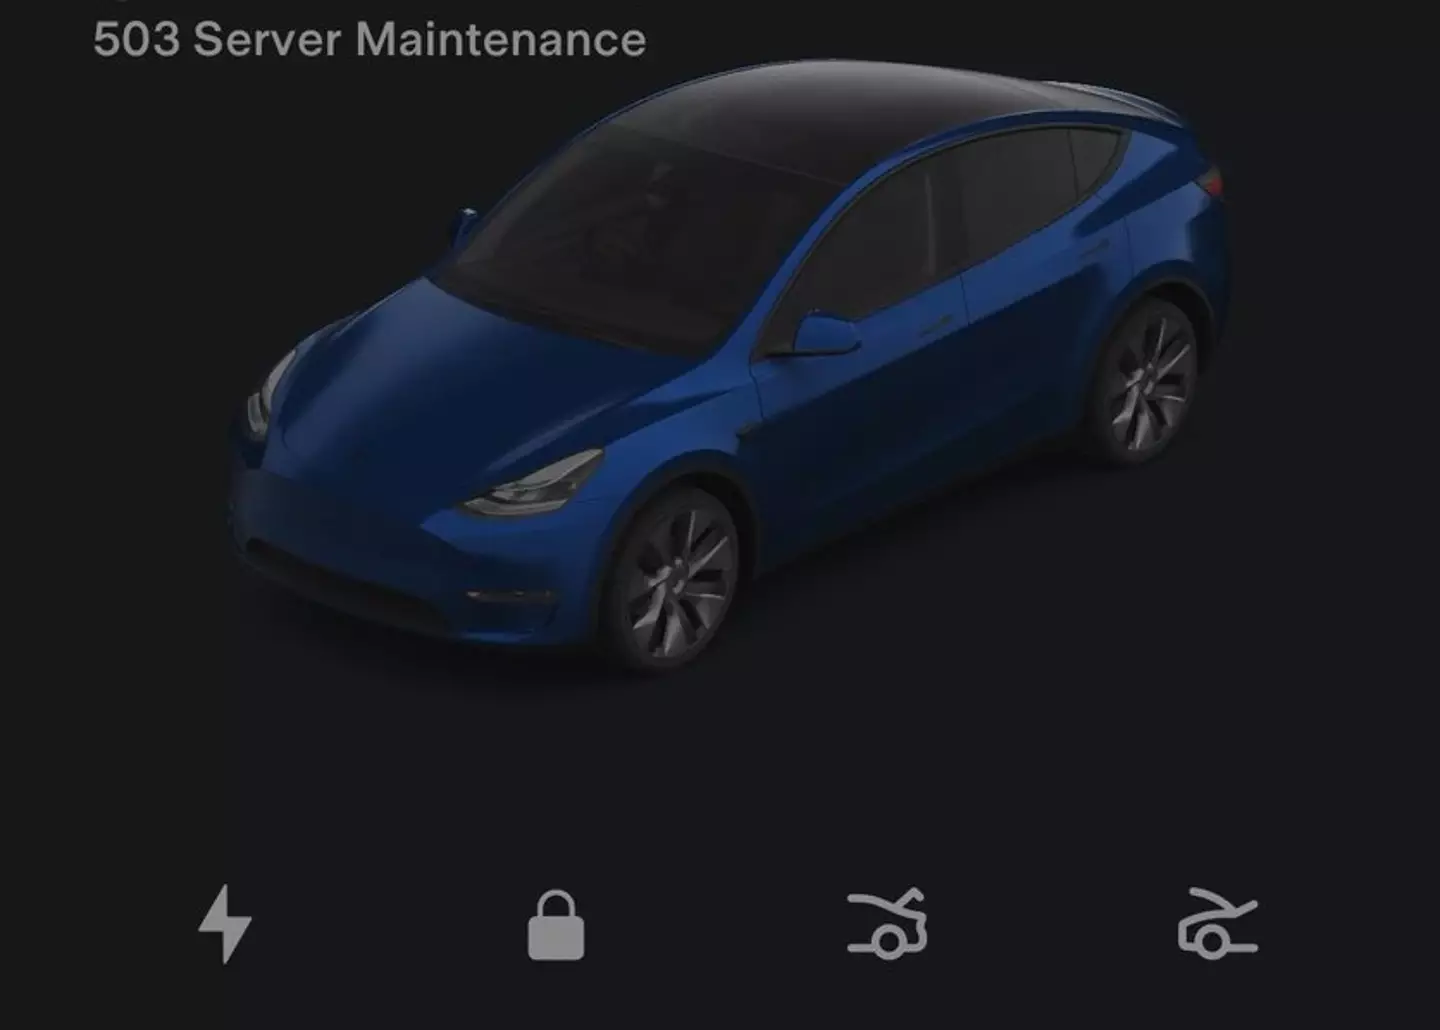 Plenty of Tesla drivers had the same '503 Server Maintenance' message.